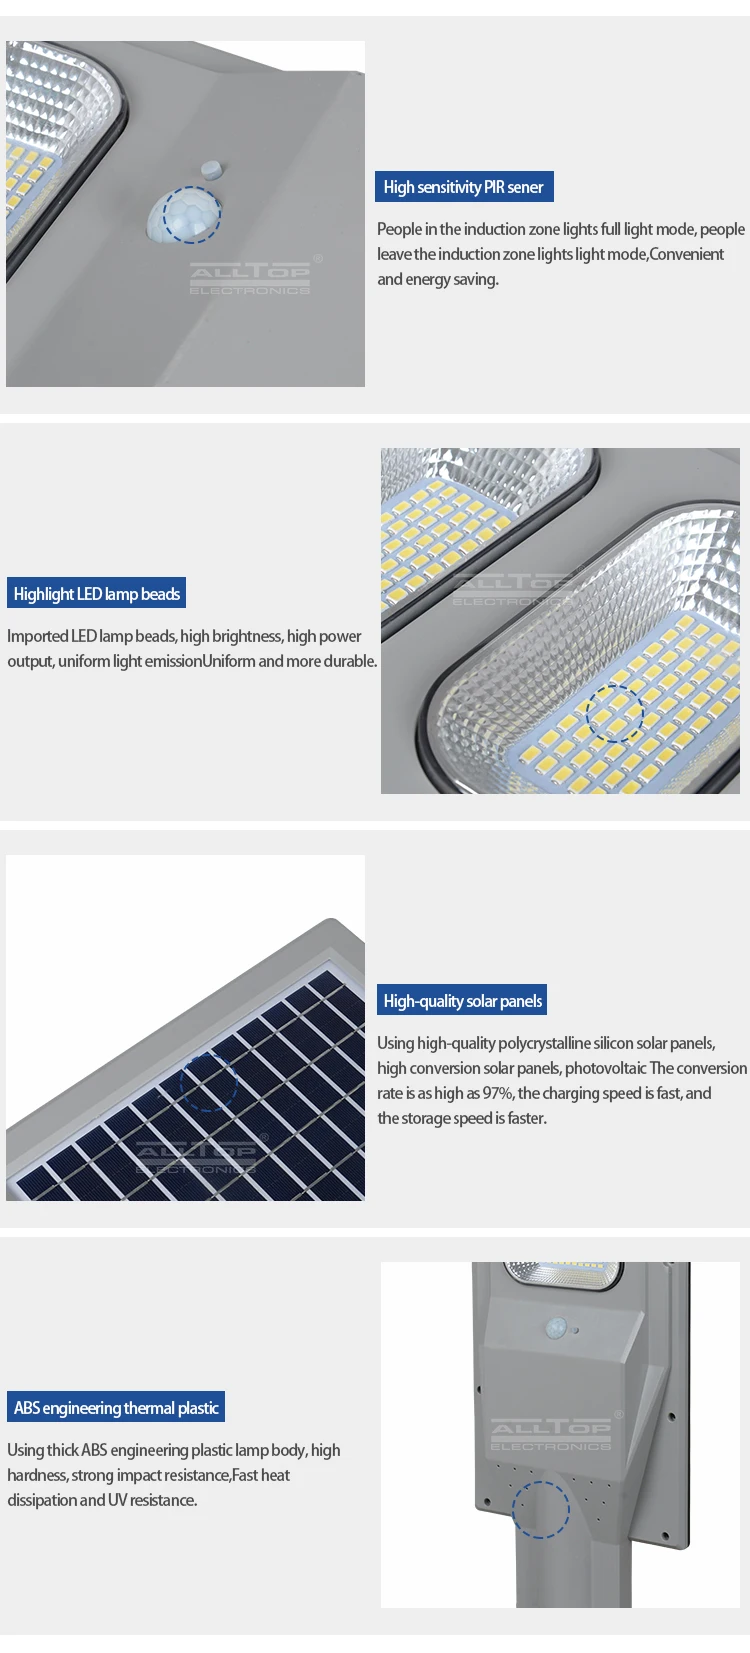 ALLTOP High quality aluminum alloy motion sensor SMD 30 60 90 120 150 watt all in one solar led streetlight